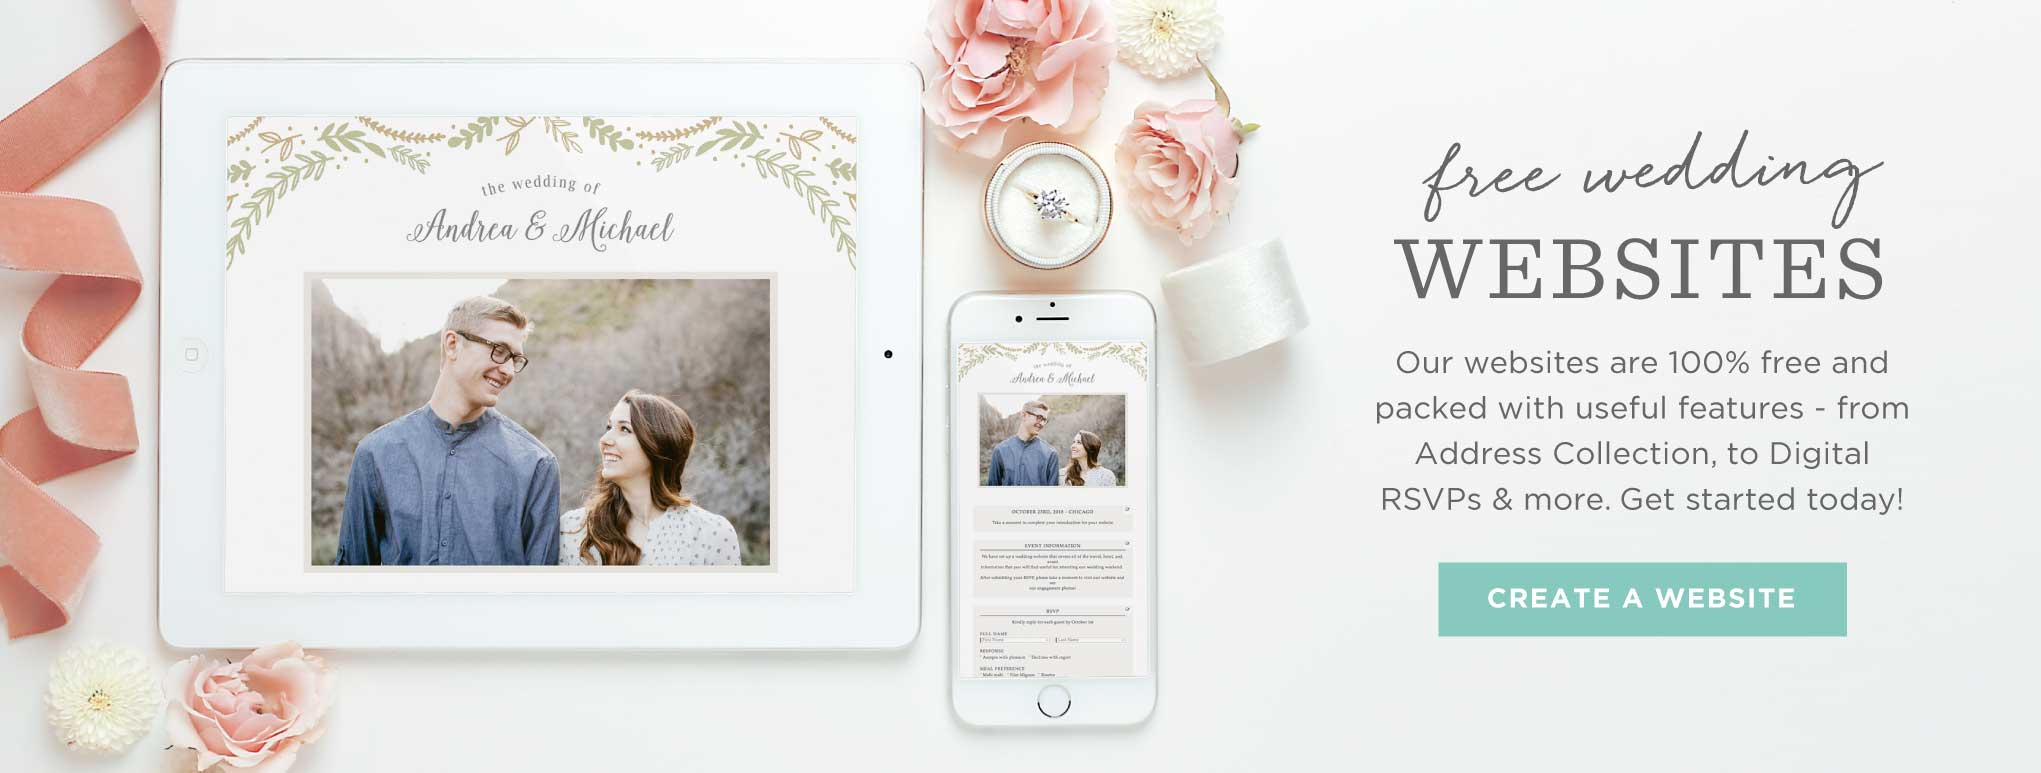 Best Wedding Invitation Websites Websites